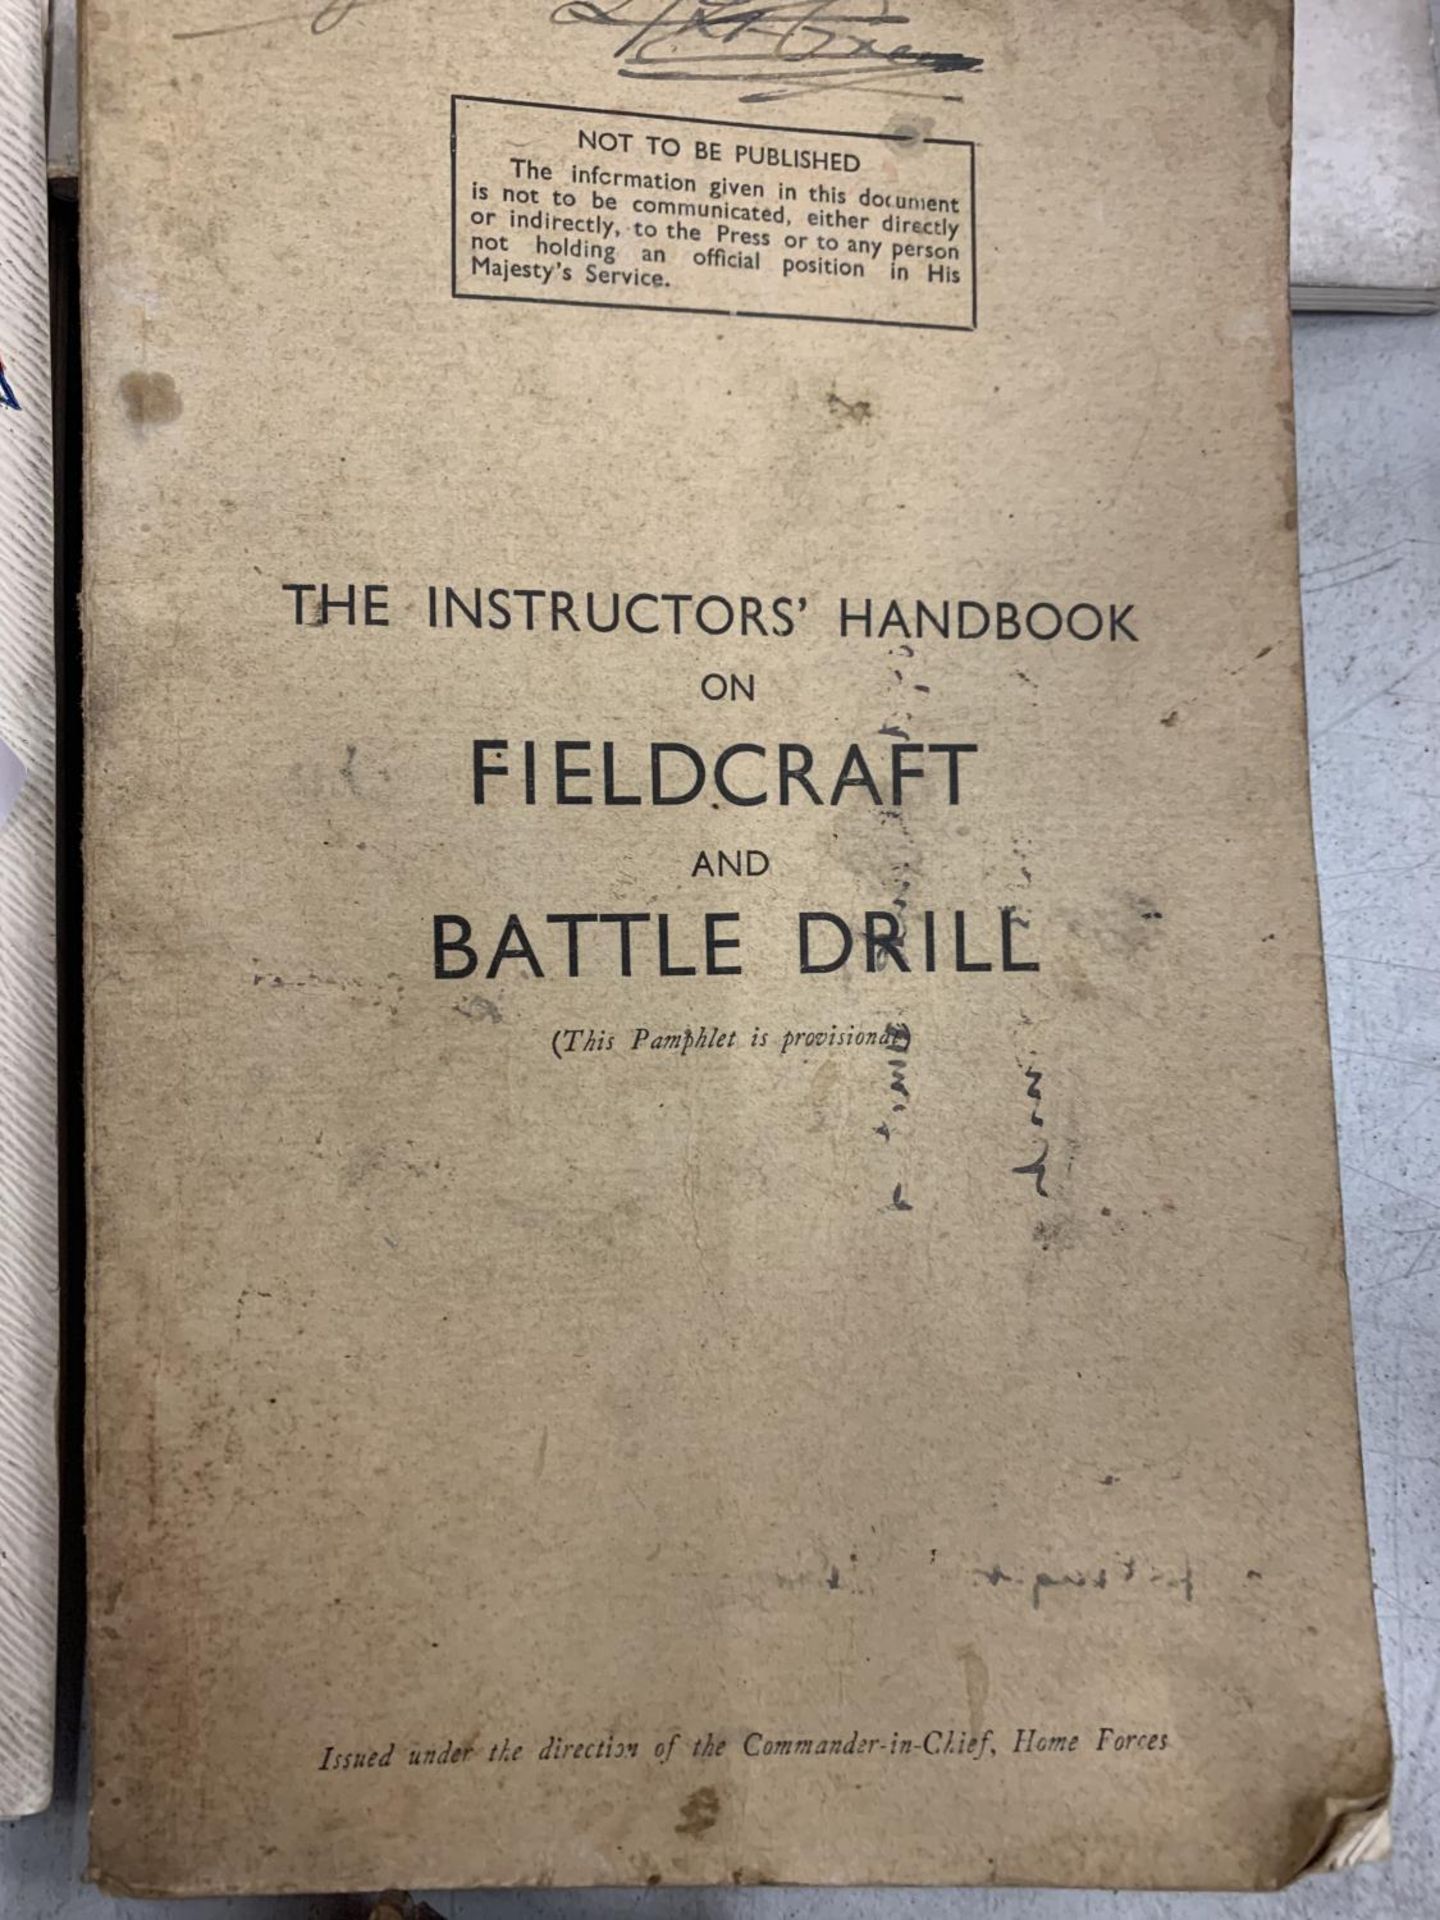 A BRITISH WORLD WAR II BOOK ON FIELDCRAFT AND BATTLE DRILL, WARRINGTON VOLUNTEERS 1798-1898, WWII - Image 3 of 10